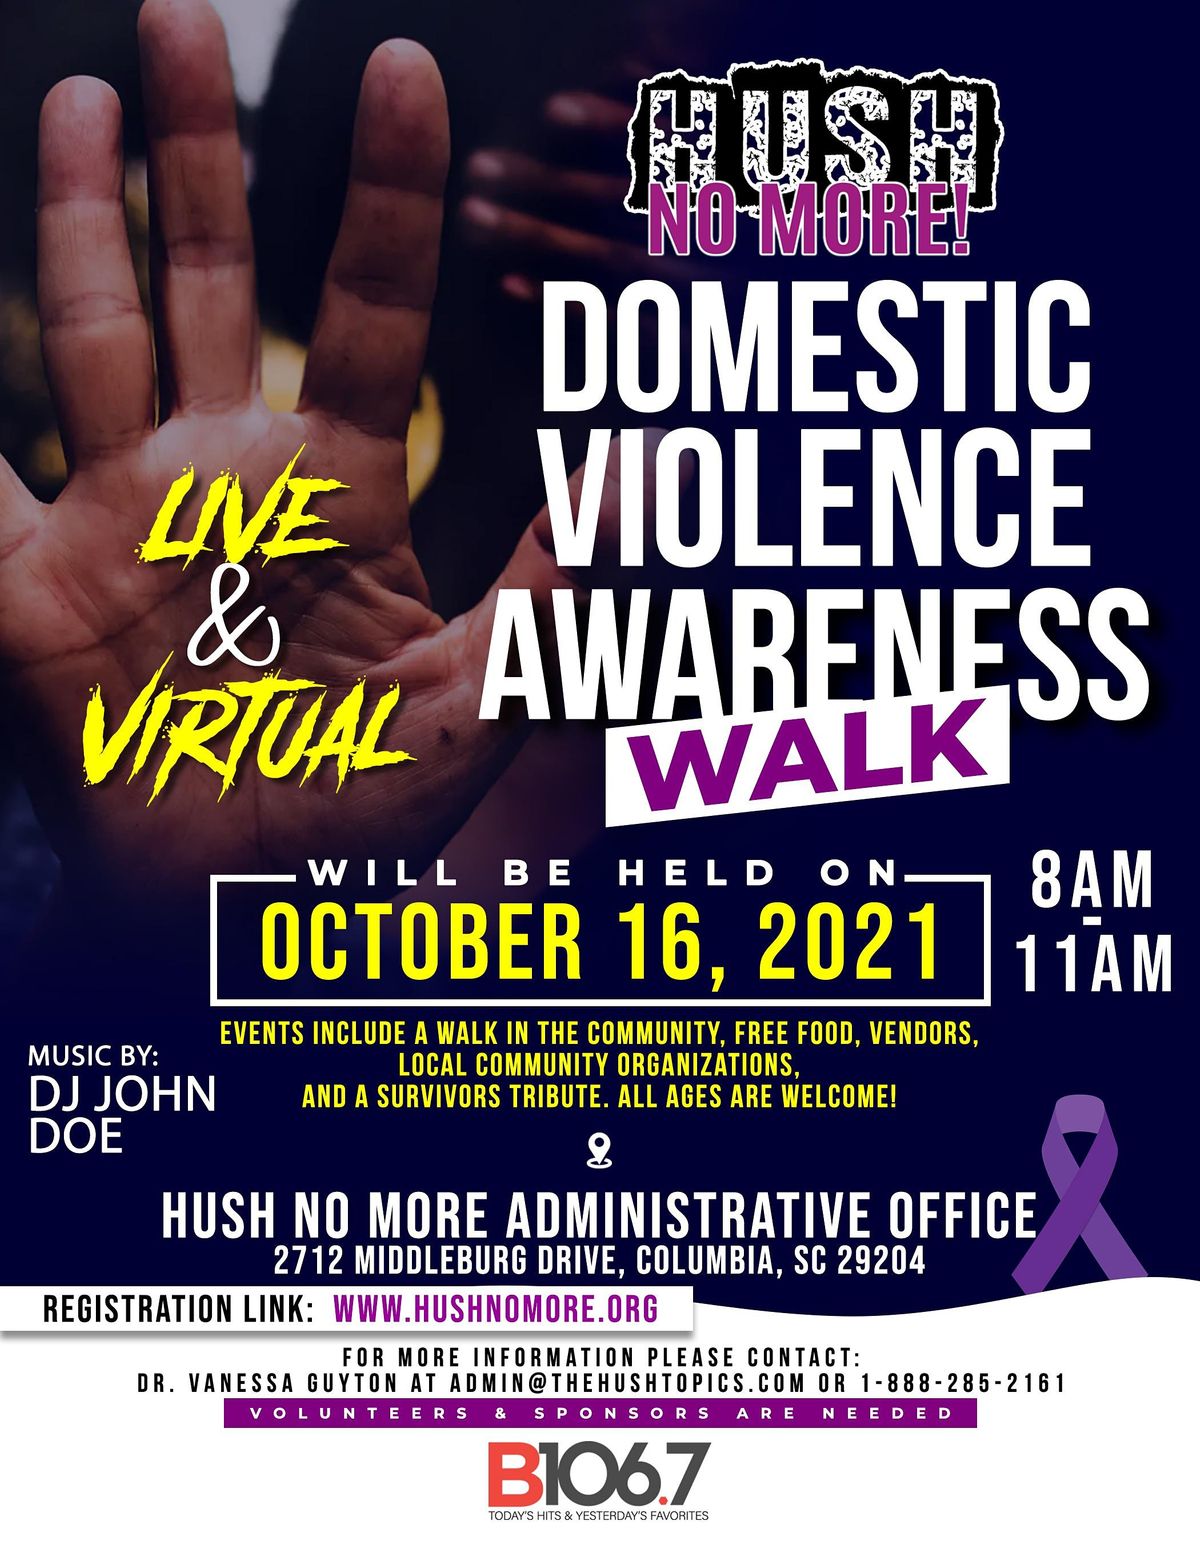 HUSH NO MORE  Domestic Violence Walk & Community Outreach